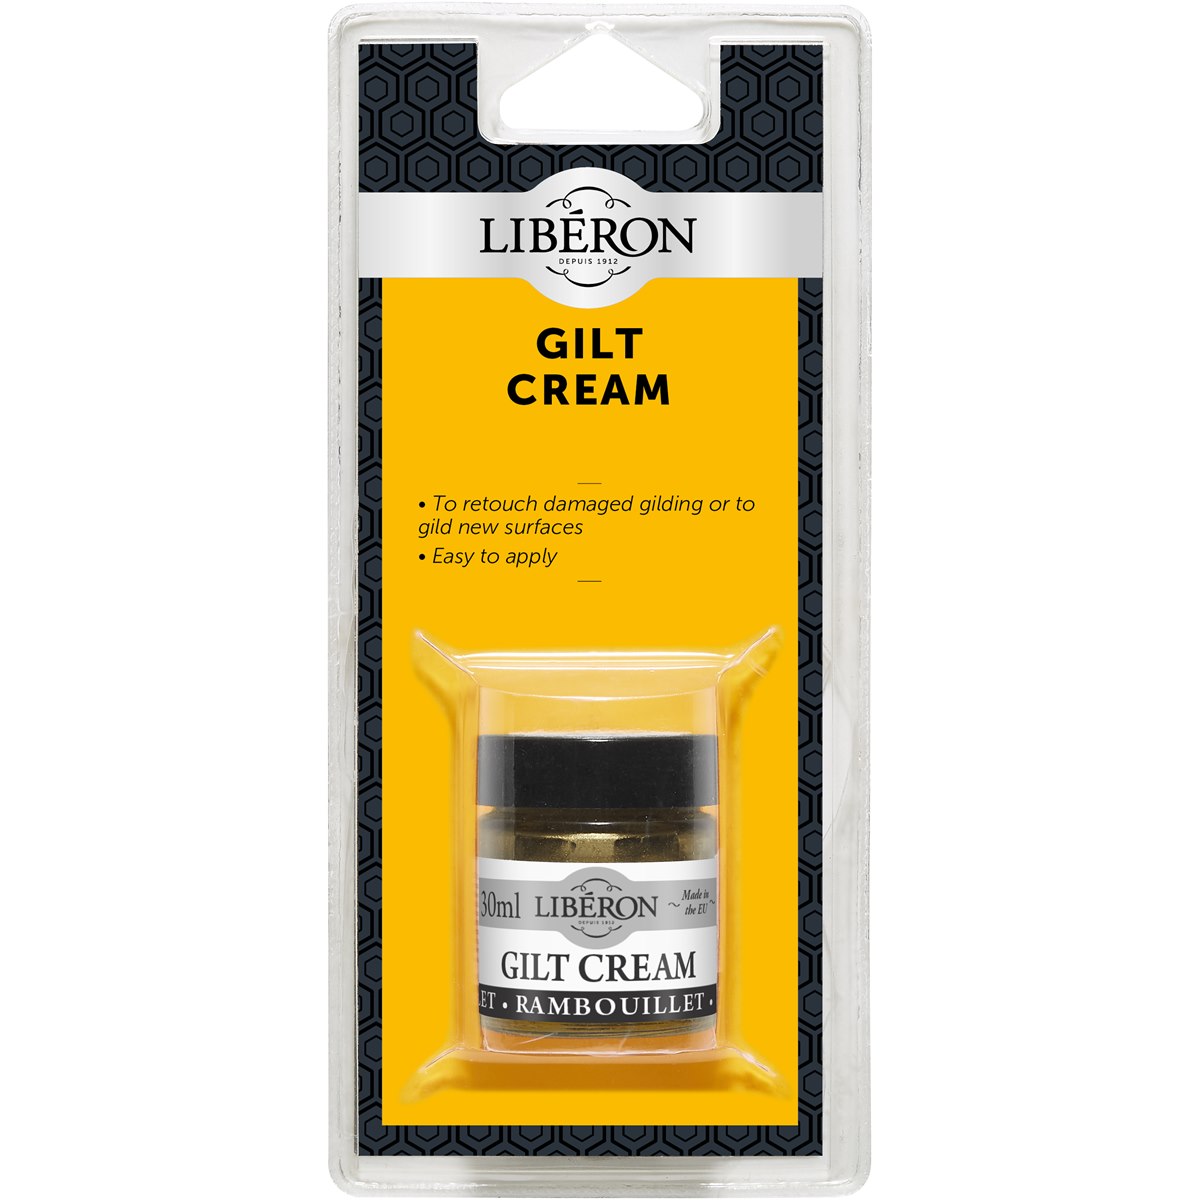 Liberon Gilt Cream Rambouillet 100ml